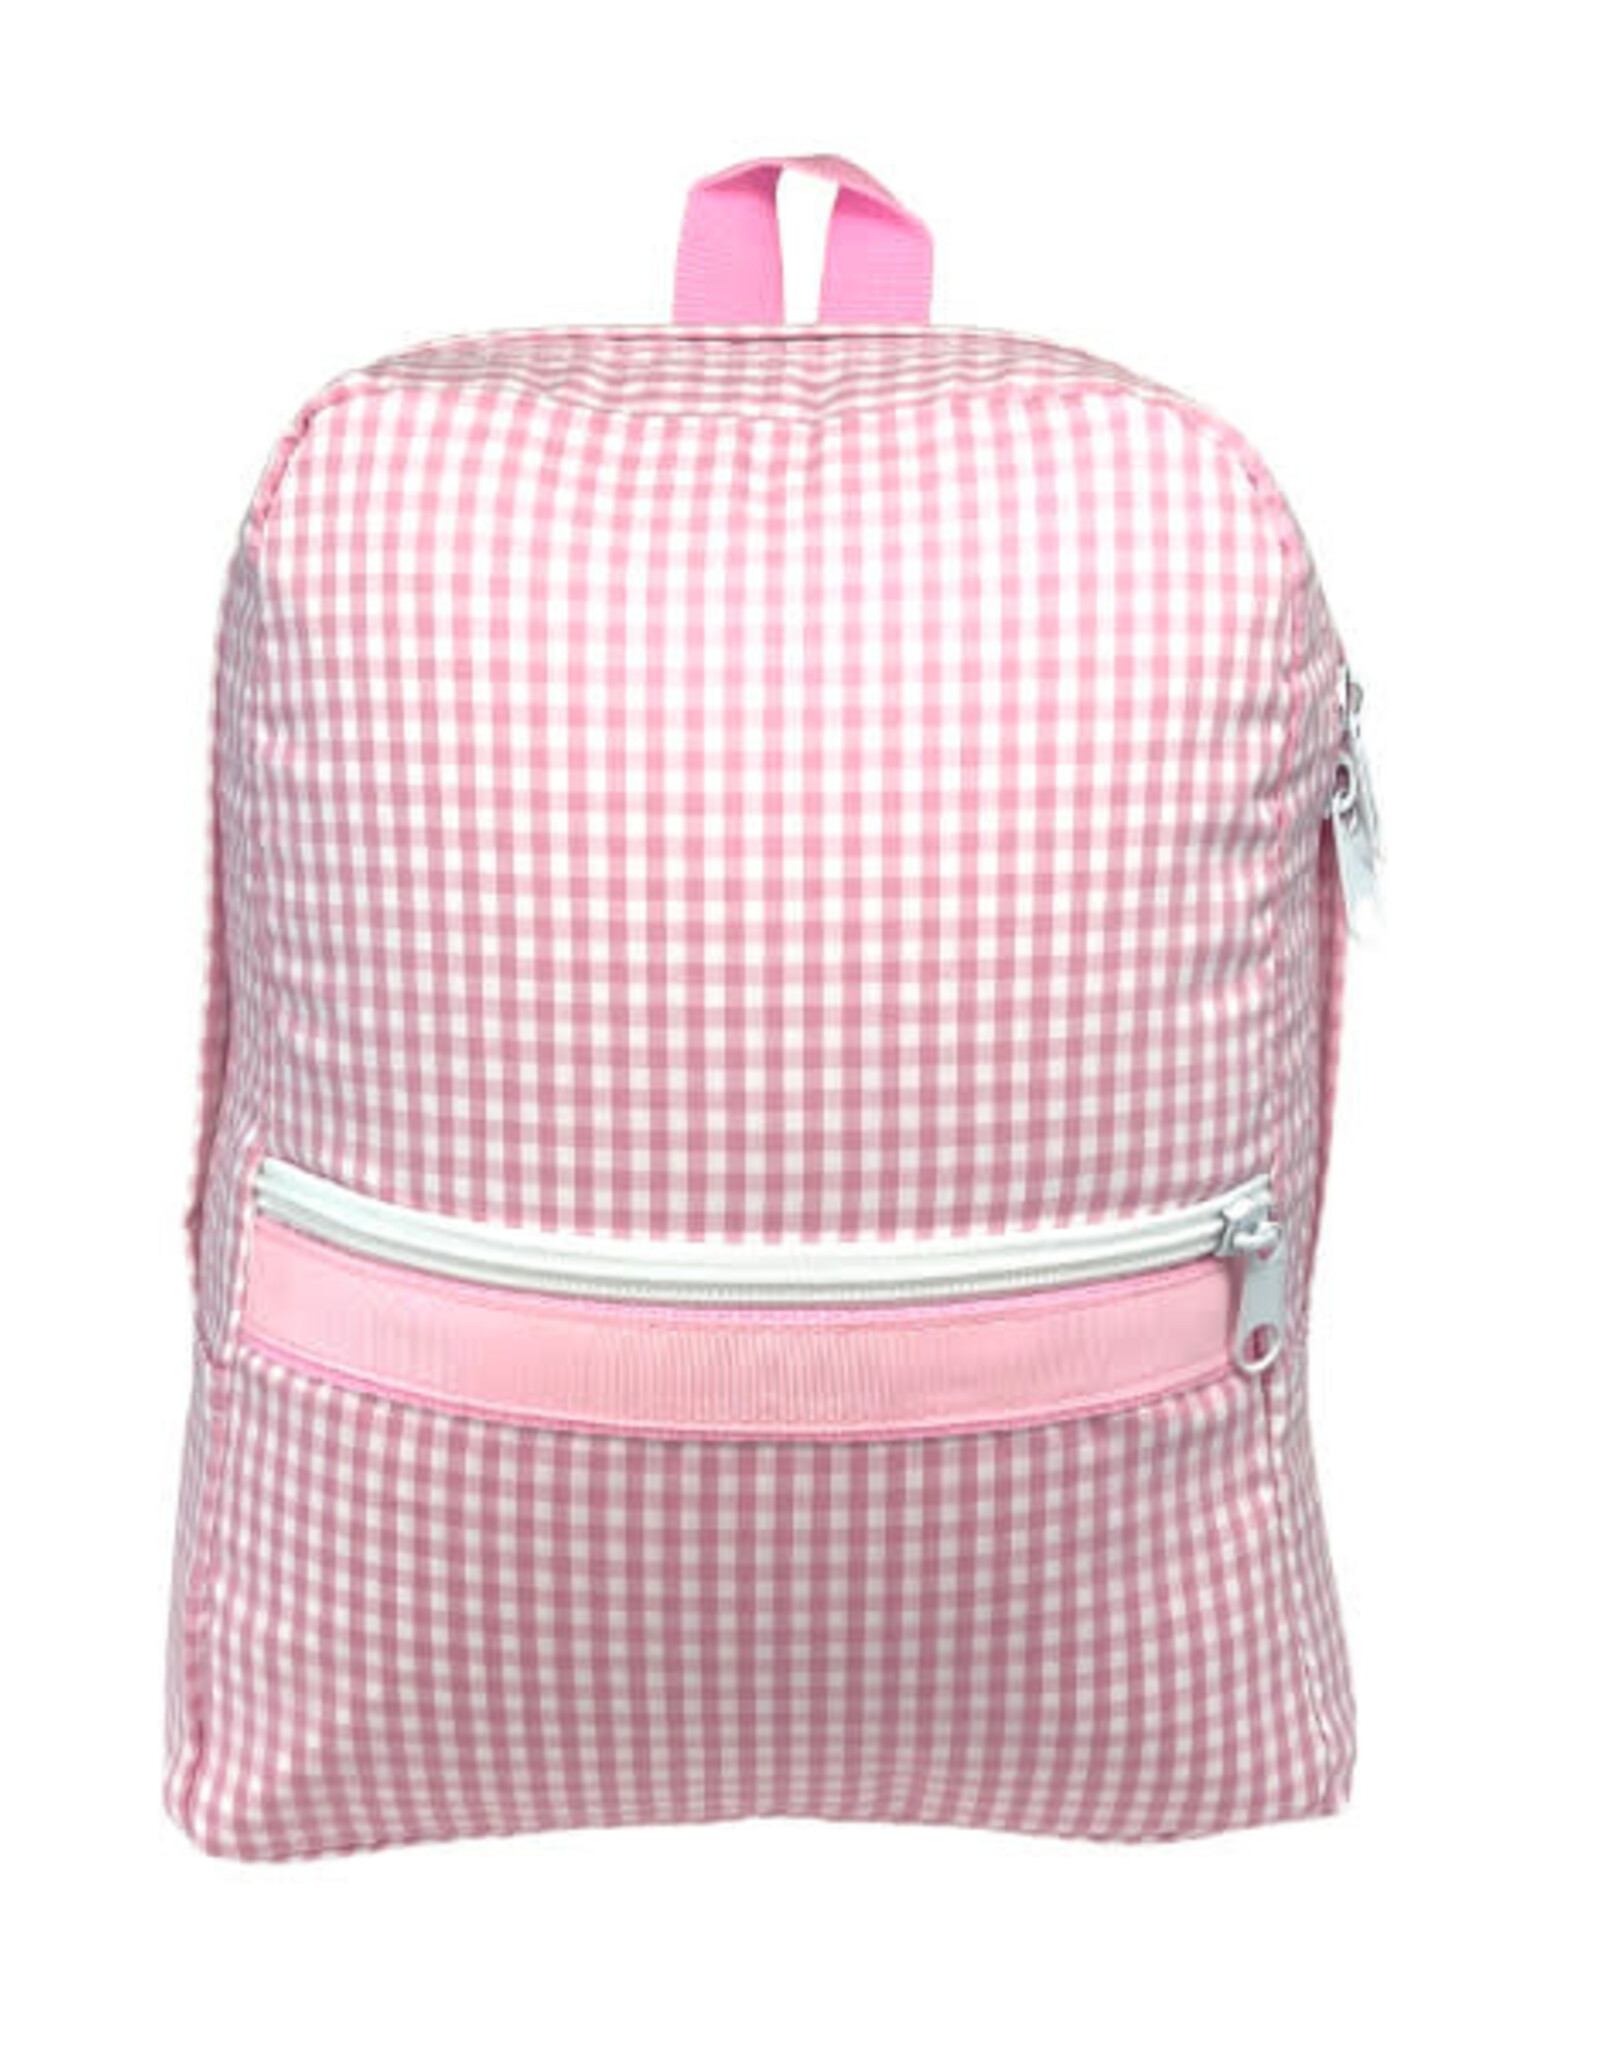 Oh Mint Medium Backpack Pink GIngham